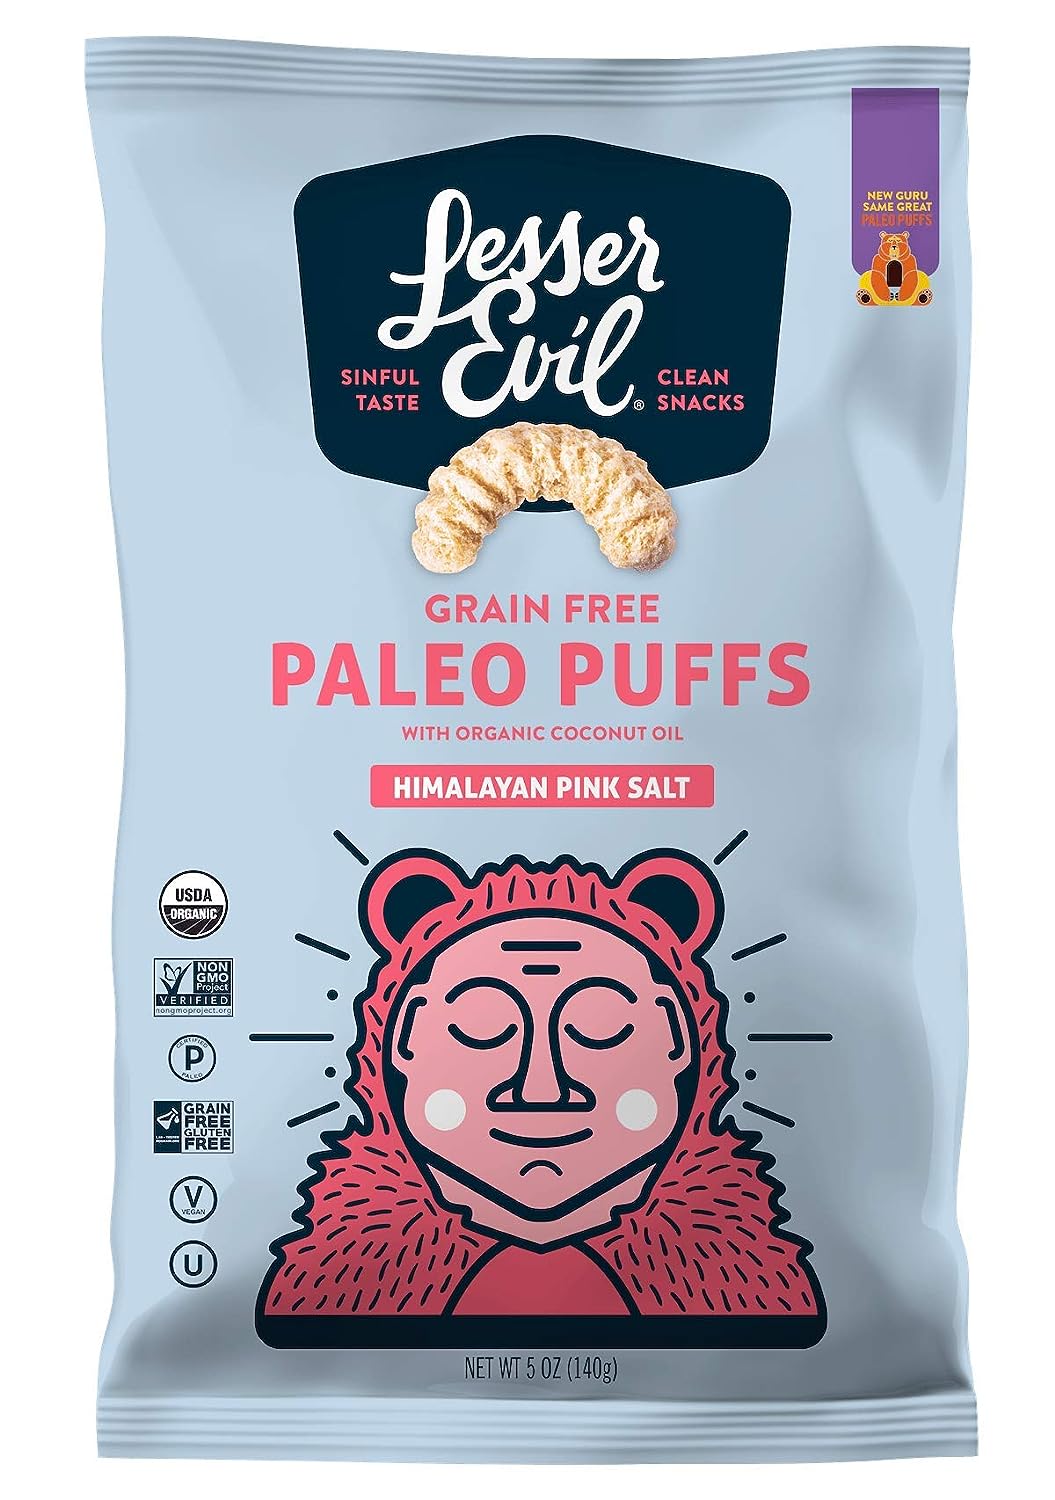 Organic Paleo Puffs Himalayan Pink Salt by Lesser Evil